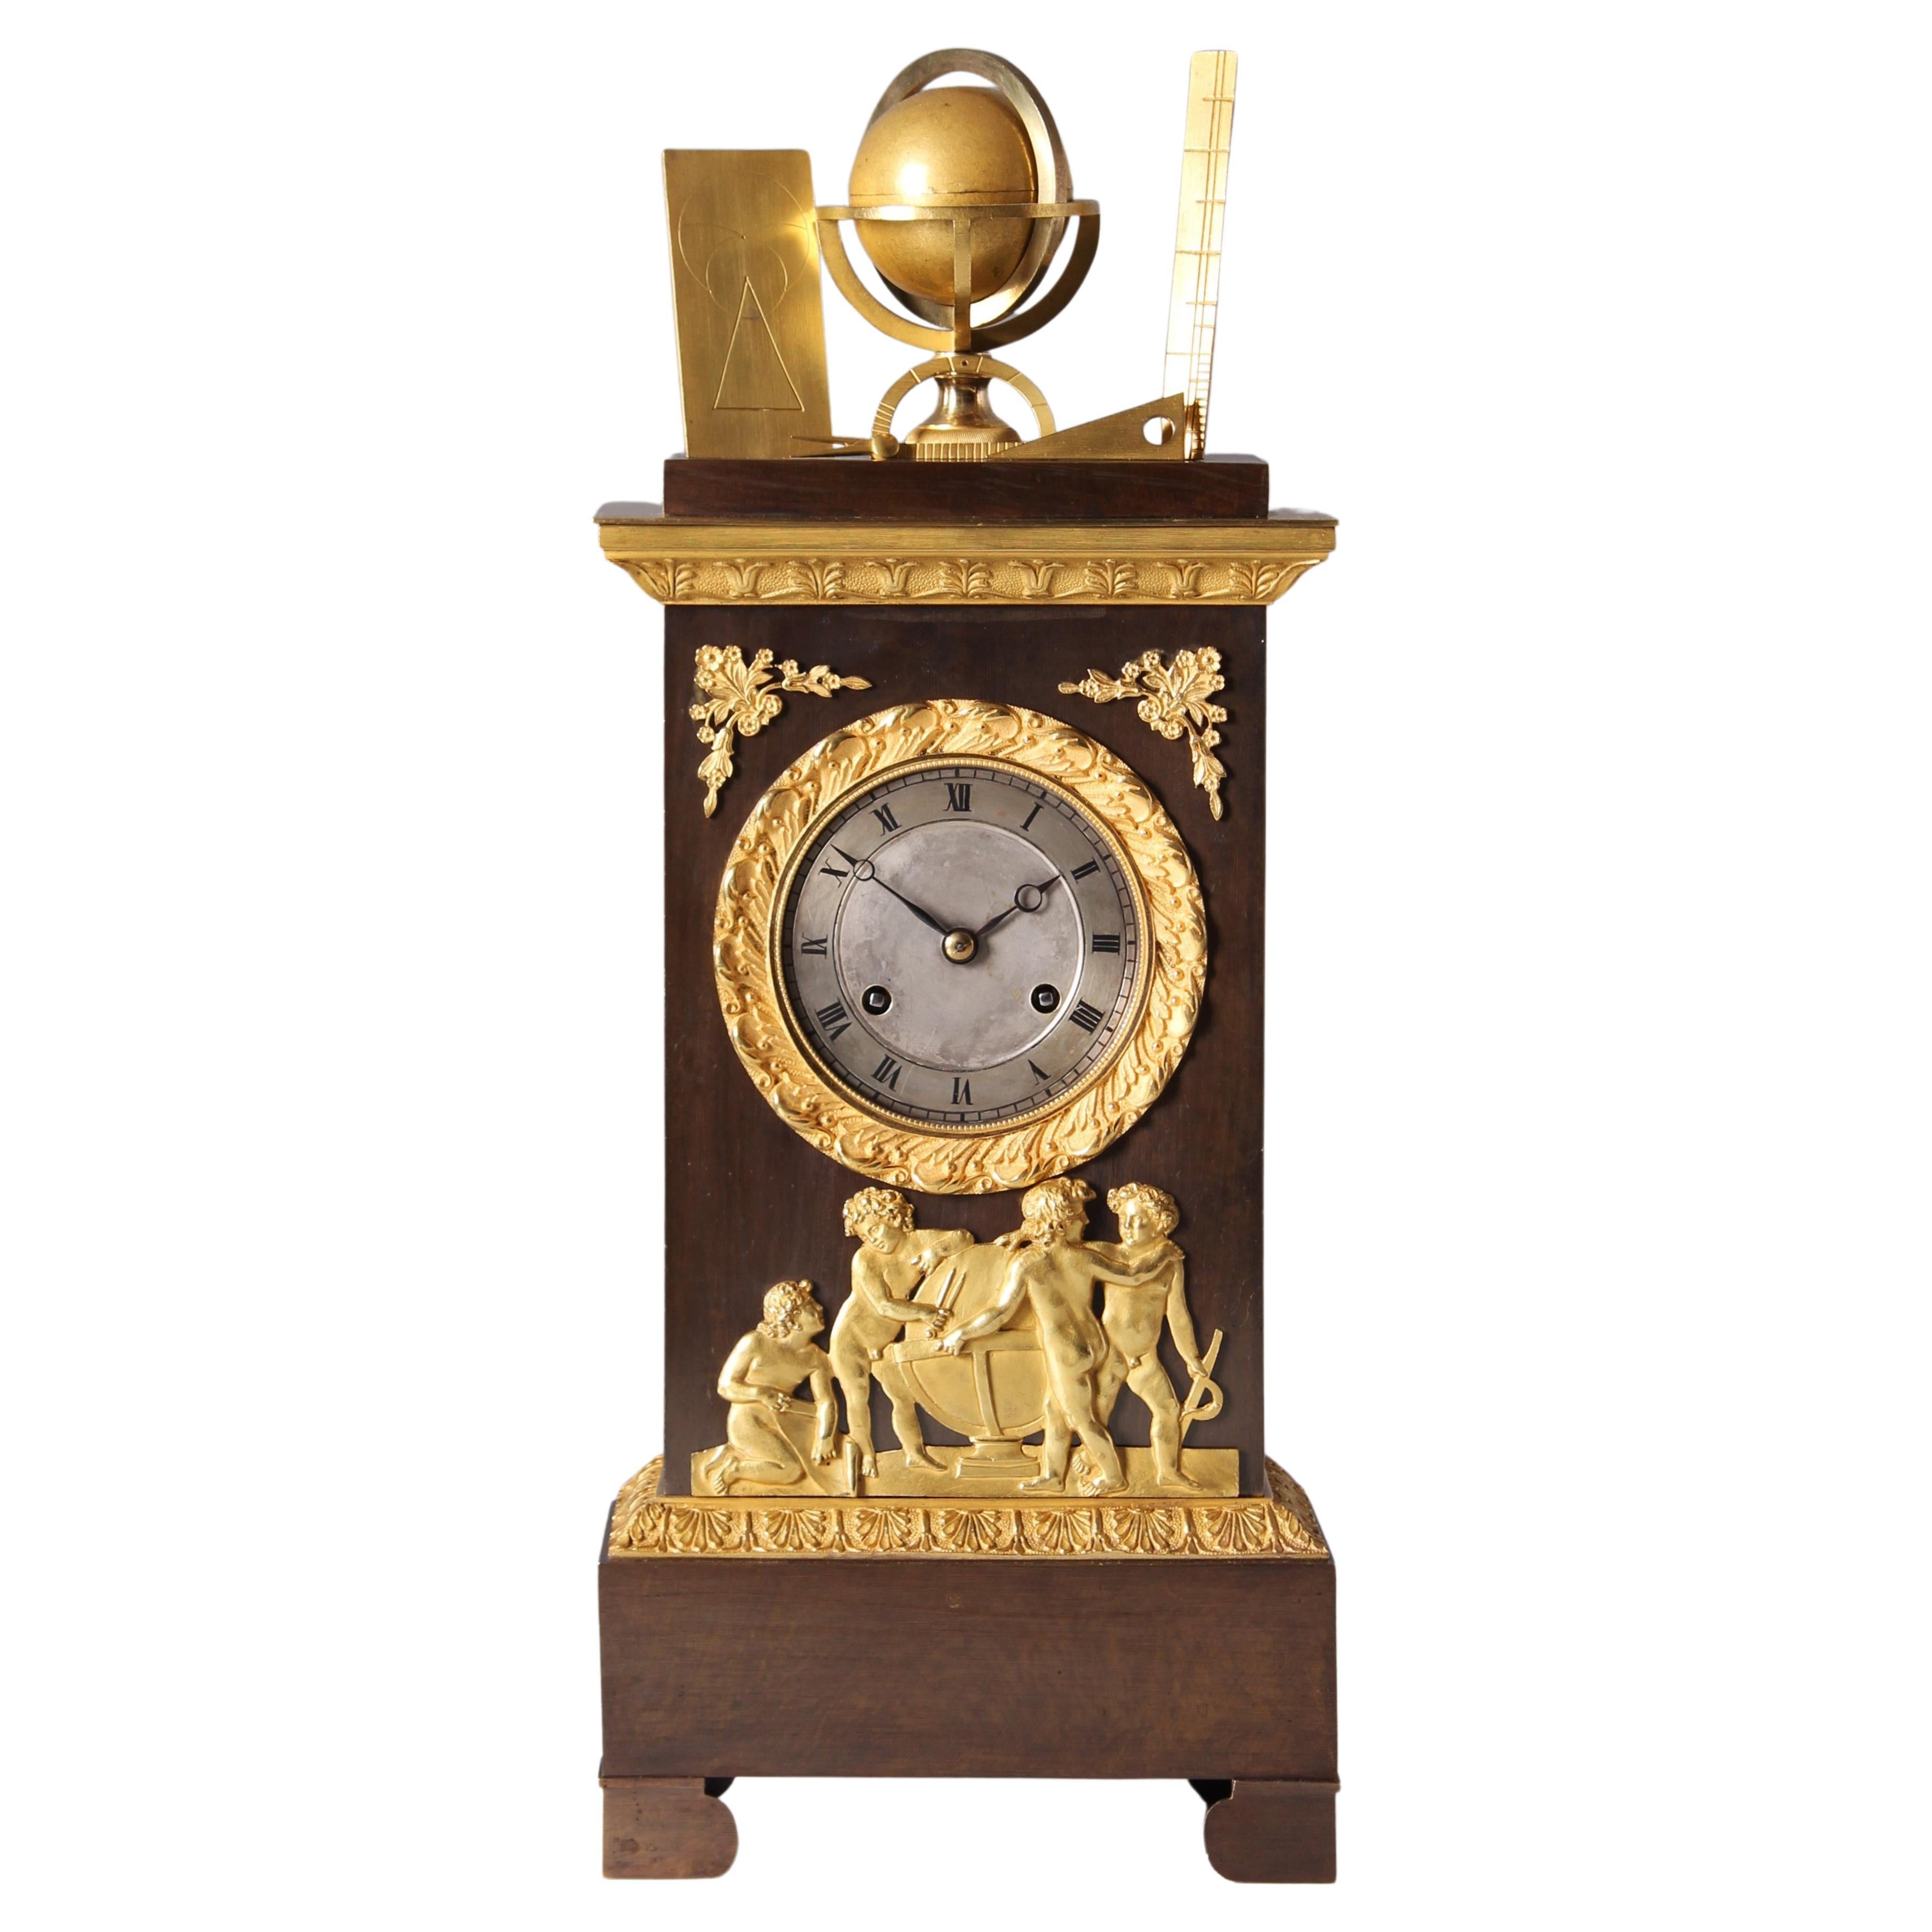 Reloj de chimenea del siglo XIX "Astronomía", Francia hacia 1830